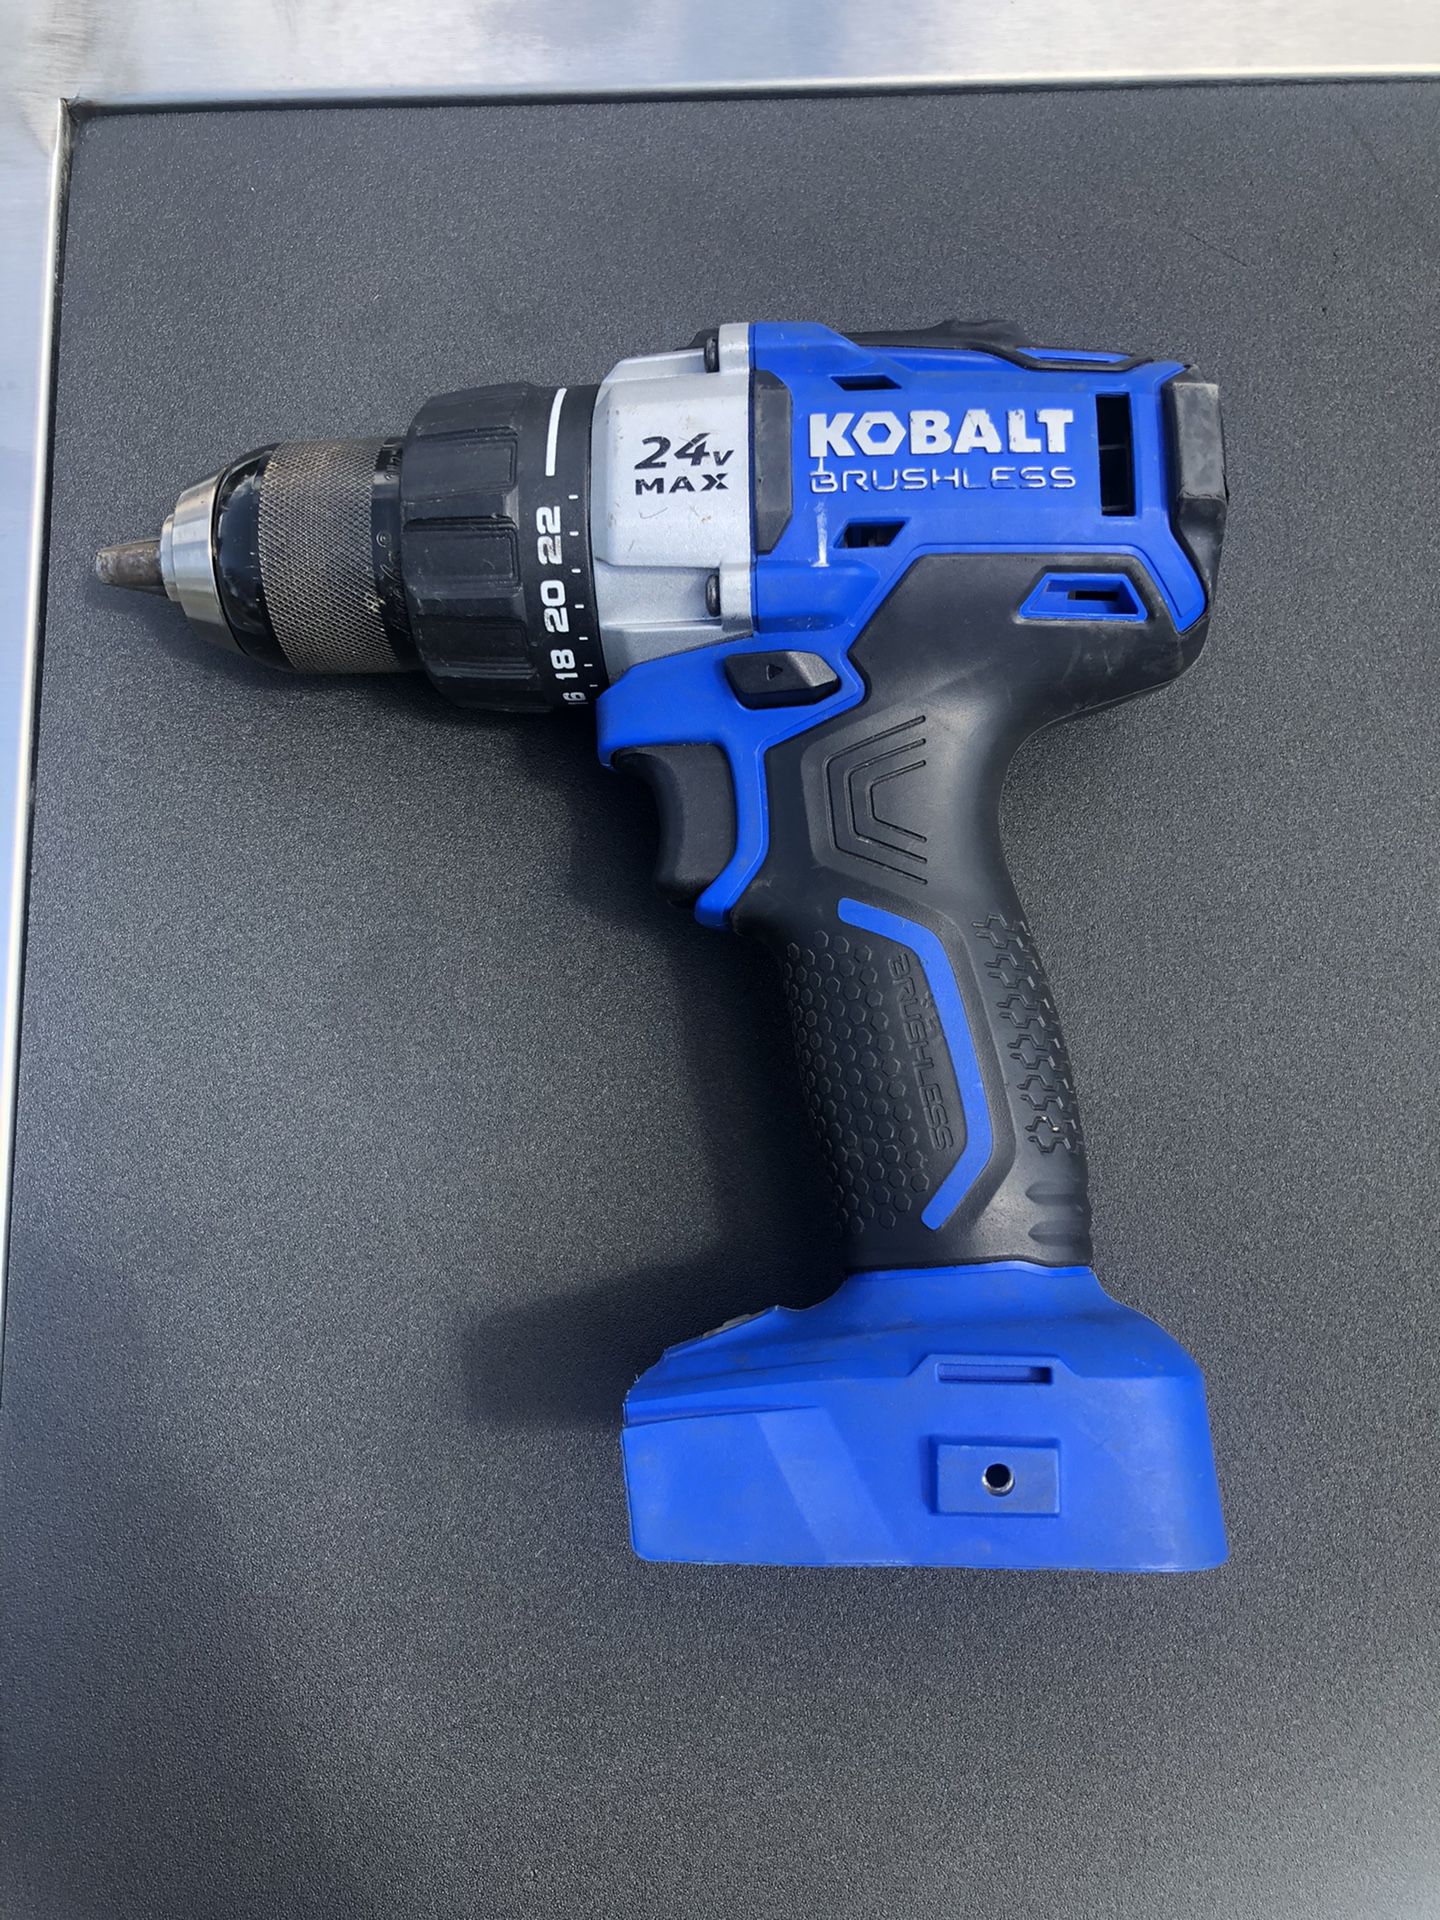 Kobalt 1/2 inch drill/driver